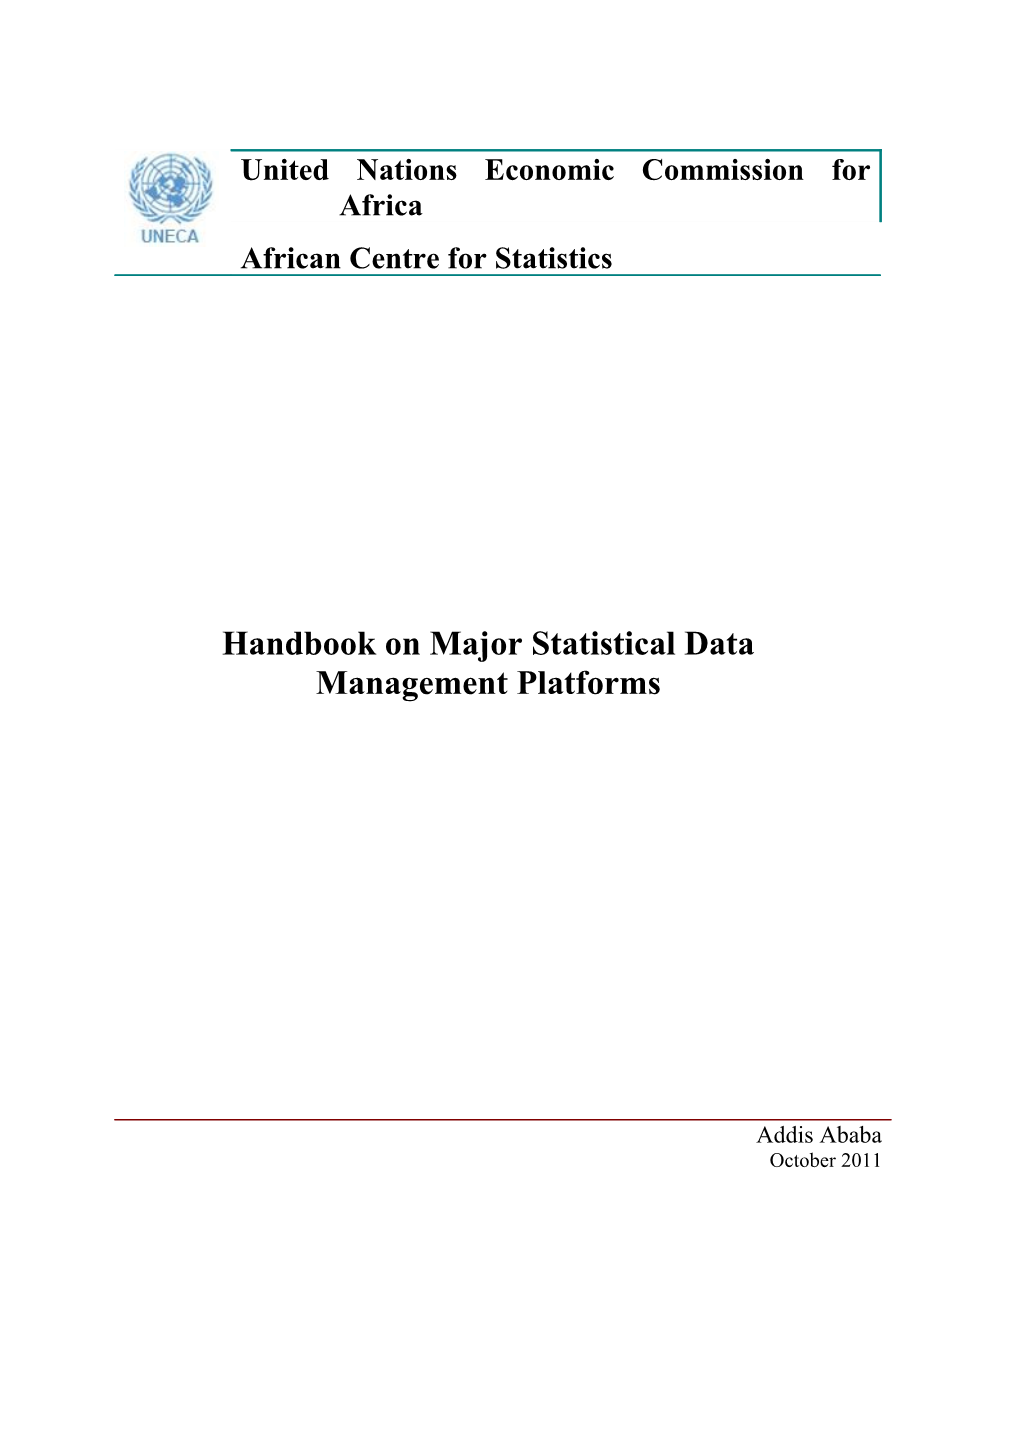 Handbook on Major Statistical Data Management Platforms